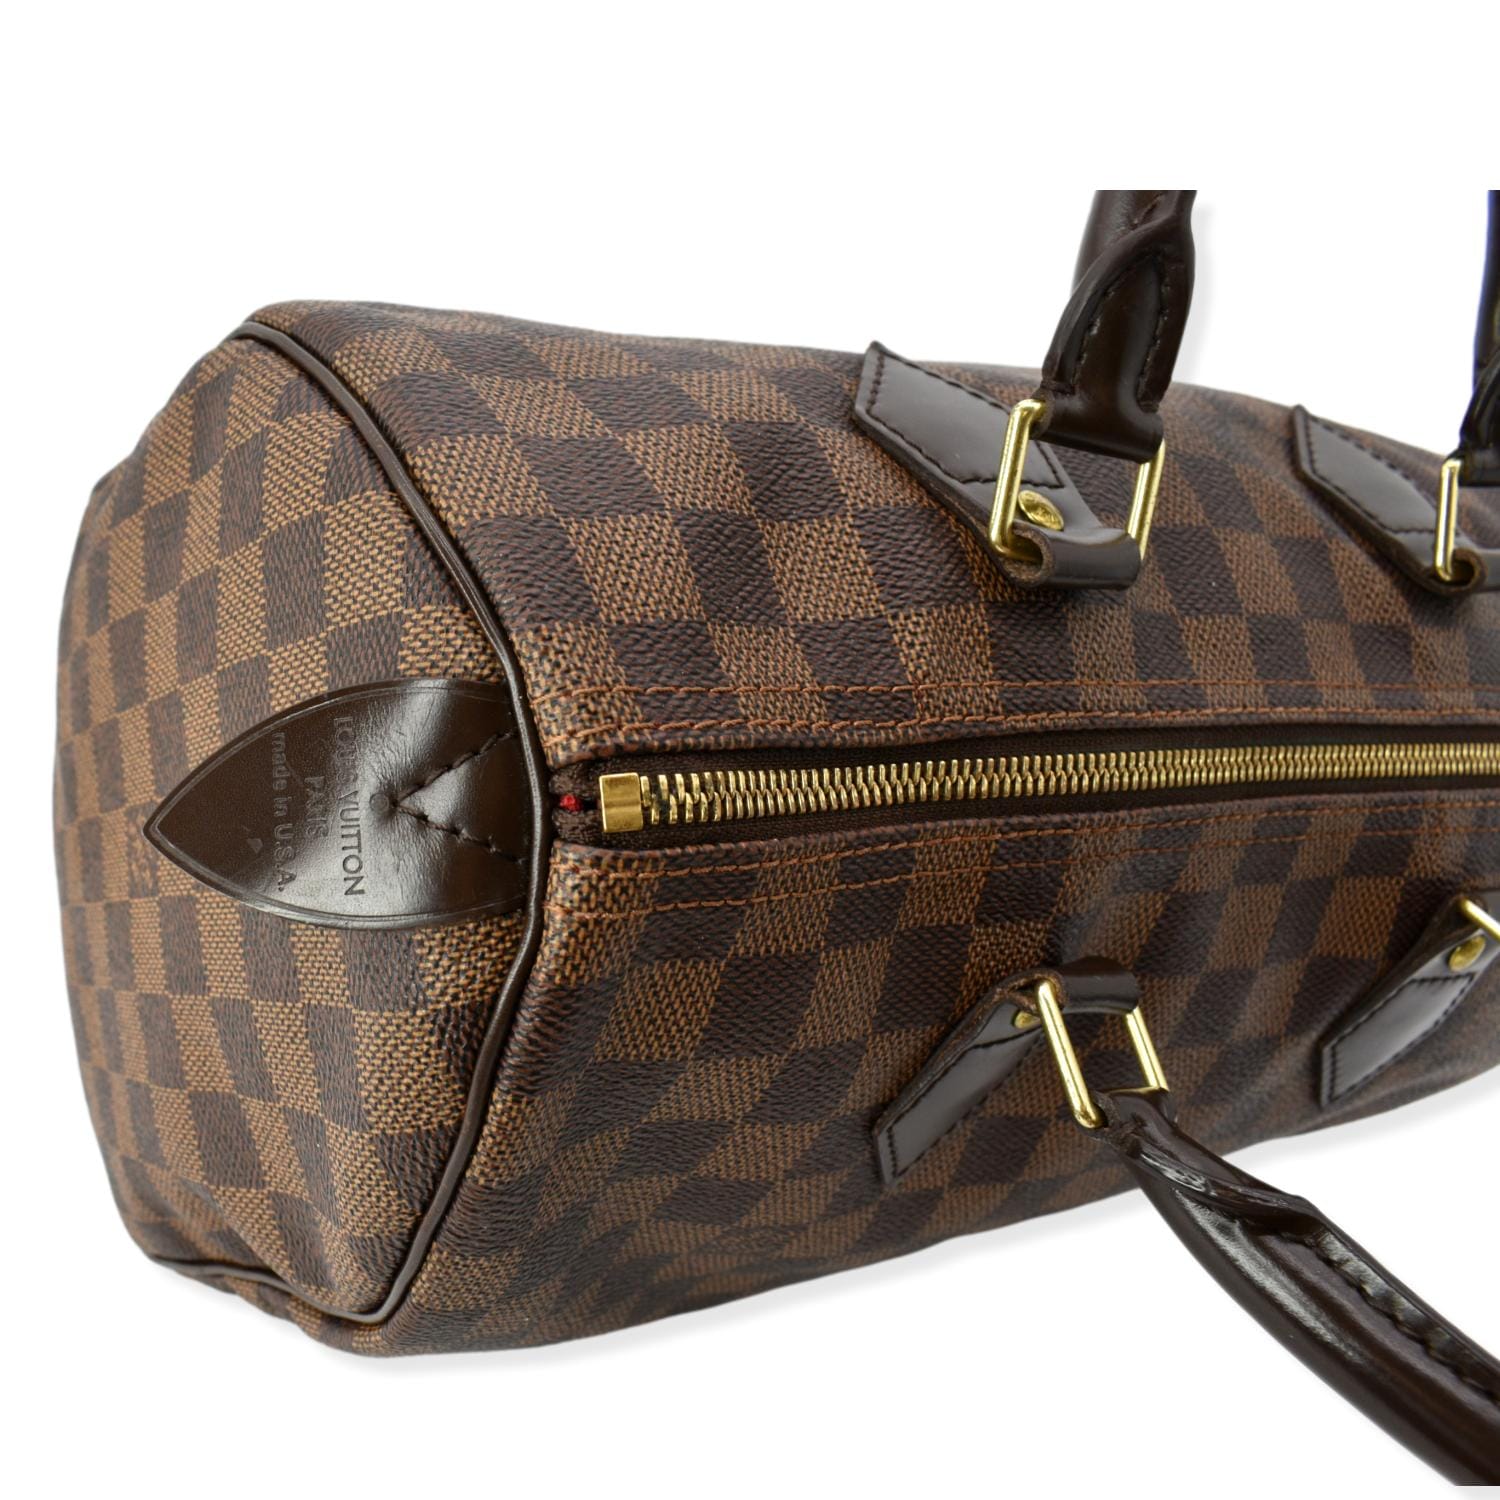 Louis Vuitton USA Bags & Handbags for Women, Authenticity Guaranteed